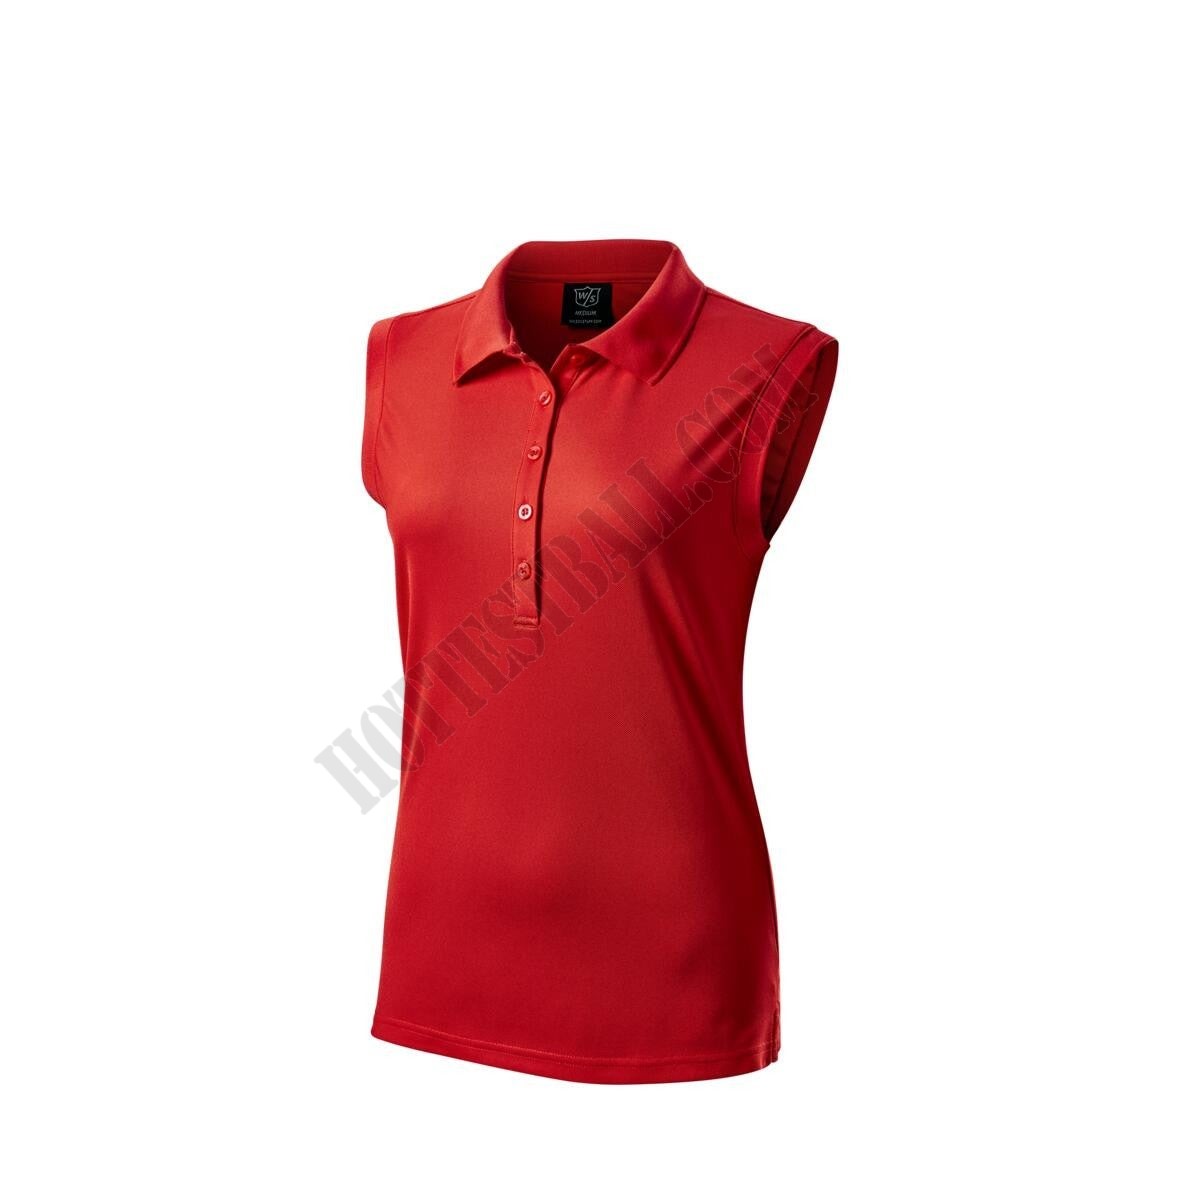 Women's Sleeveless Polo Shirt - Wilson Discount Store - Women's Sleeveless Polo Shirt - Wilson Discount Store